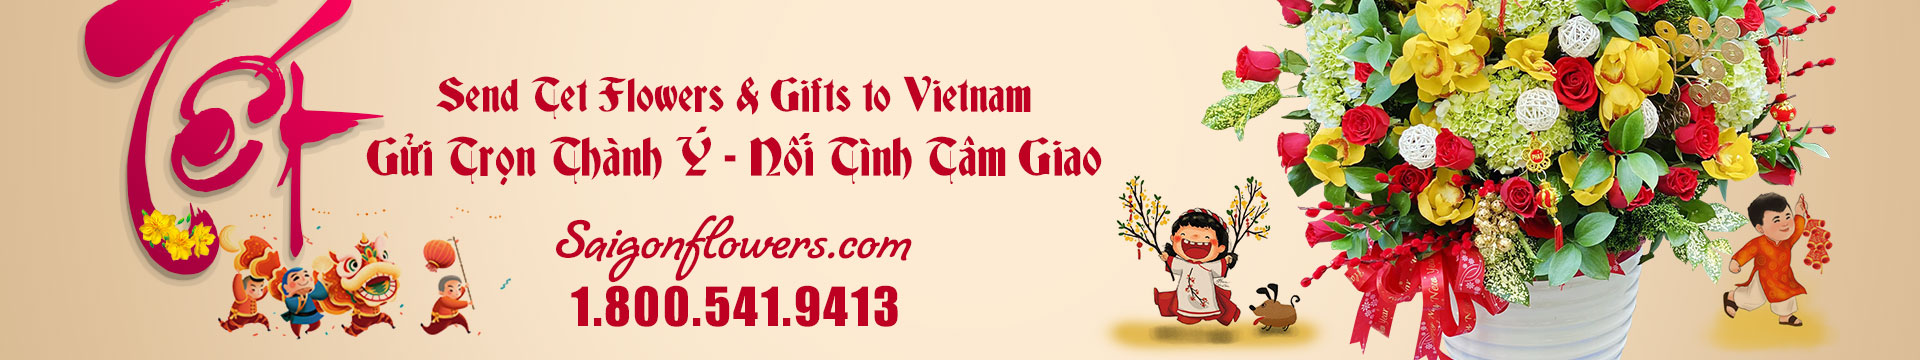 tet festival vietnam saigonflowers banner 1920x360